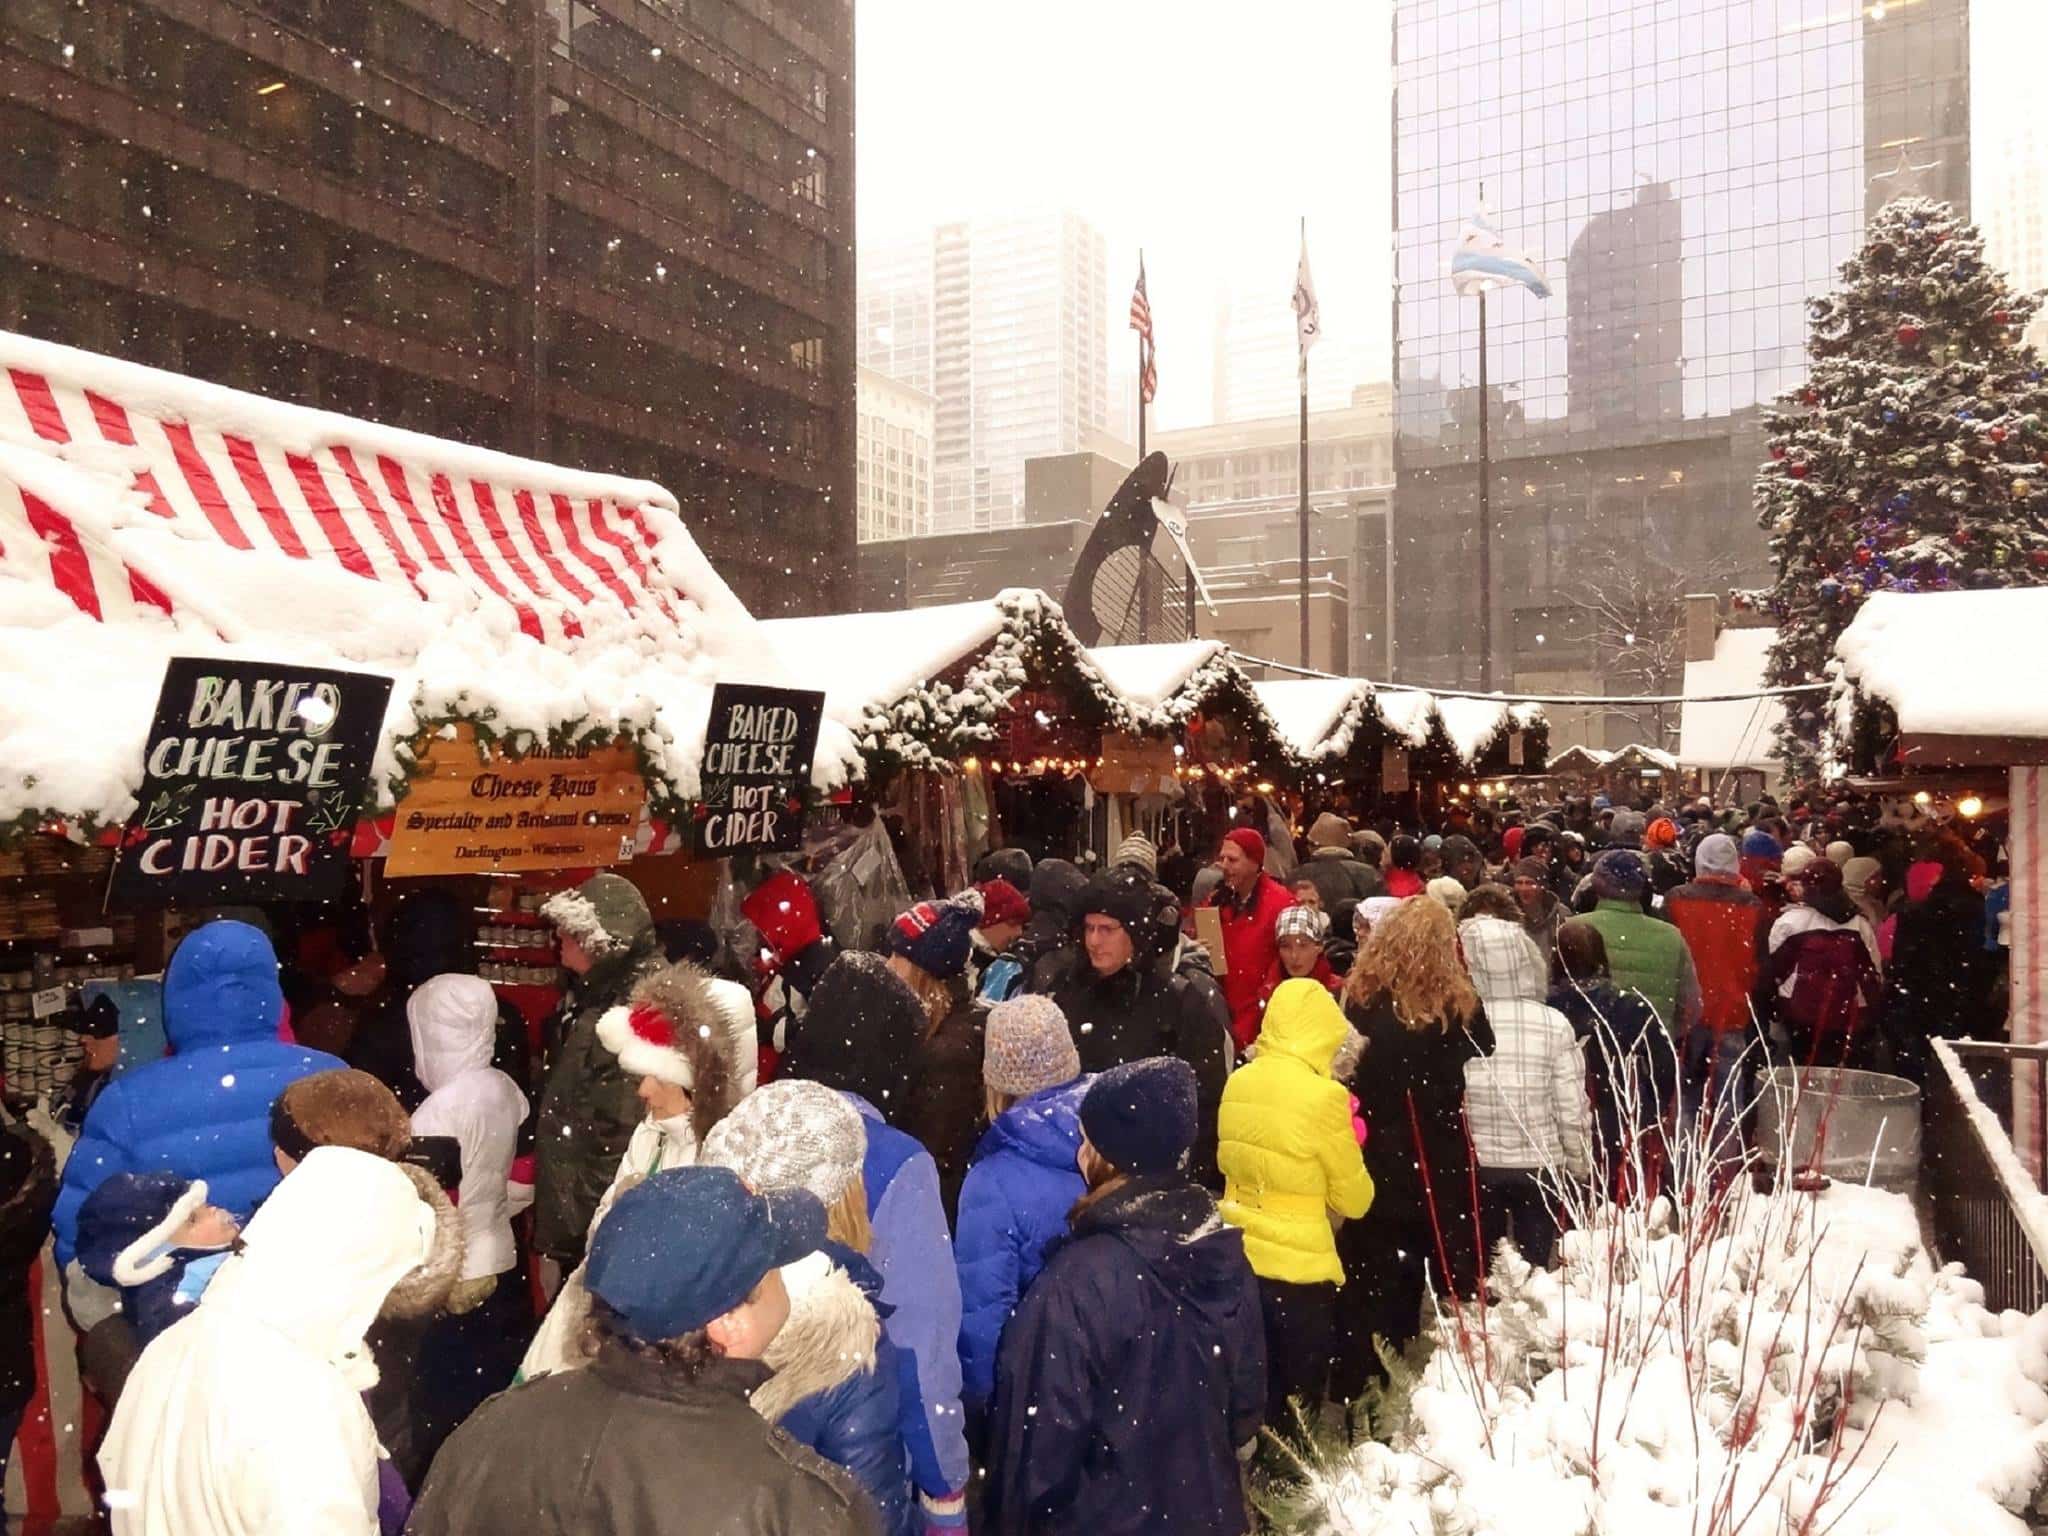 Christkindlmarket Chicago market in the snow